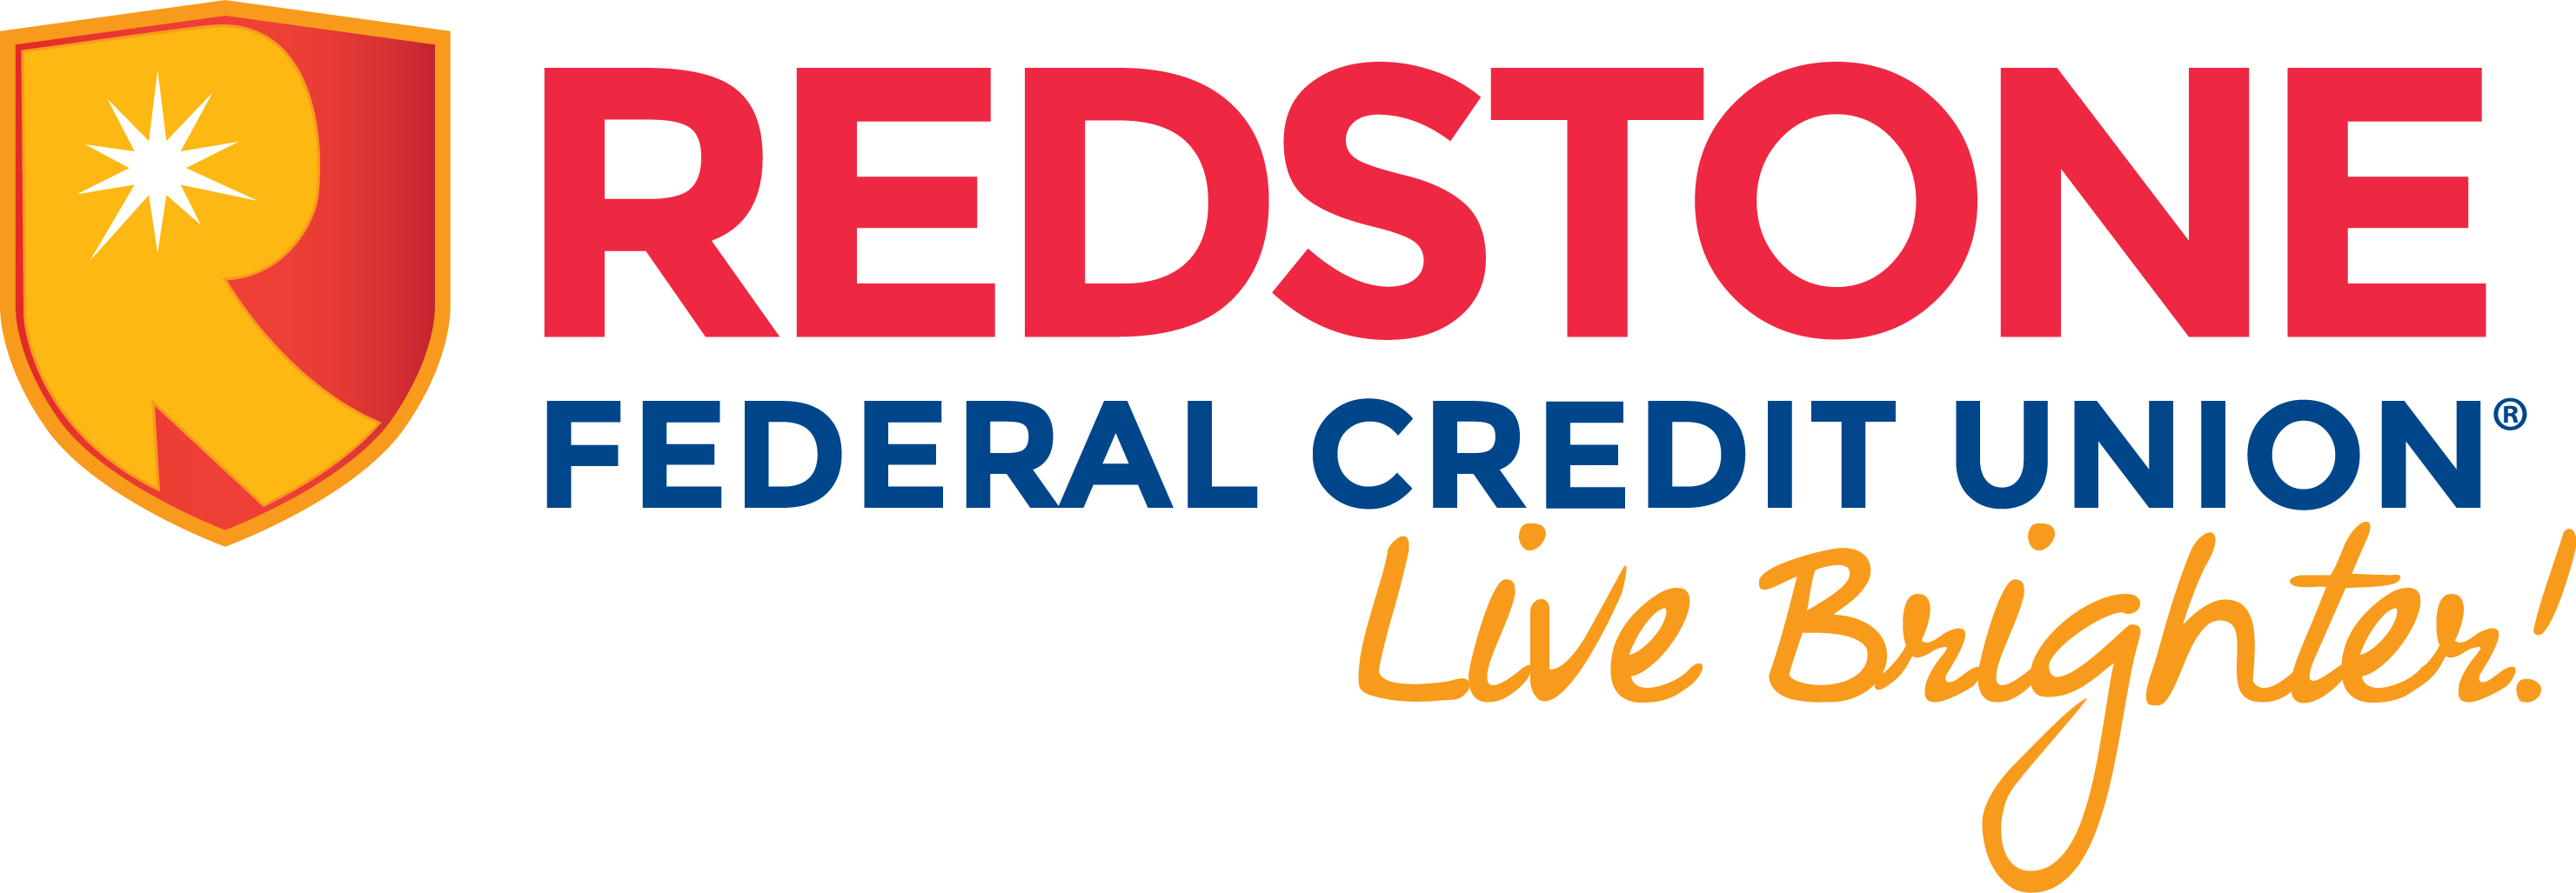 3Redstone Federal Credit Union